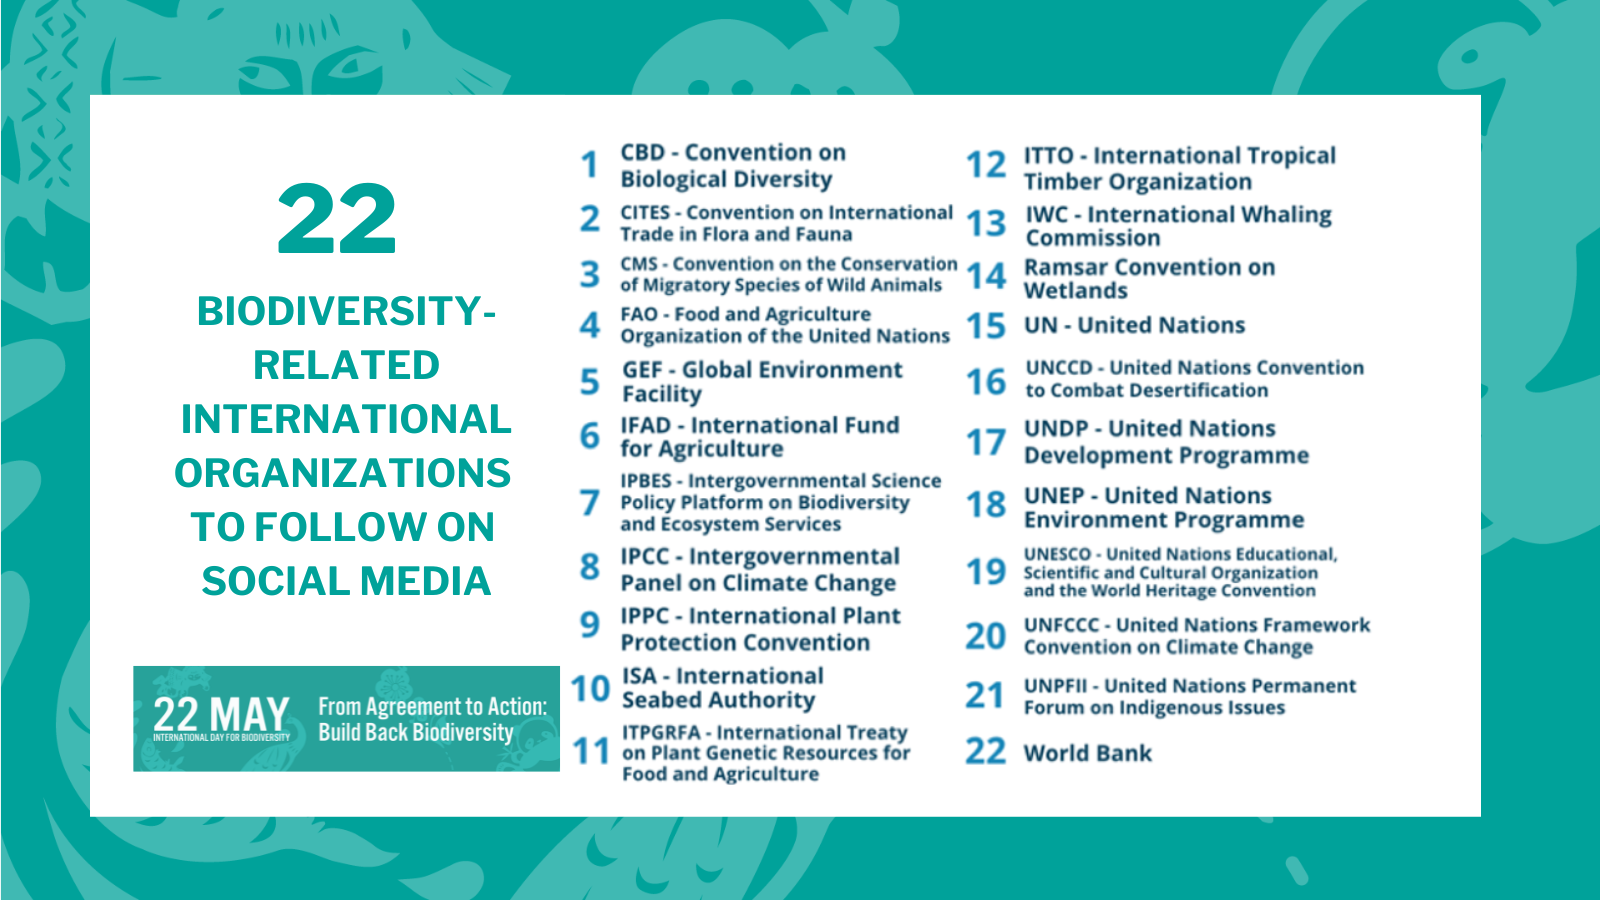 IDB 2023 - 22 biodiversity-related international organizations to follow on social media